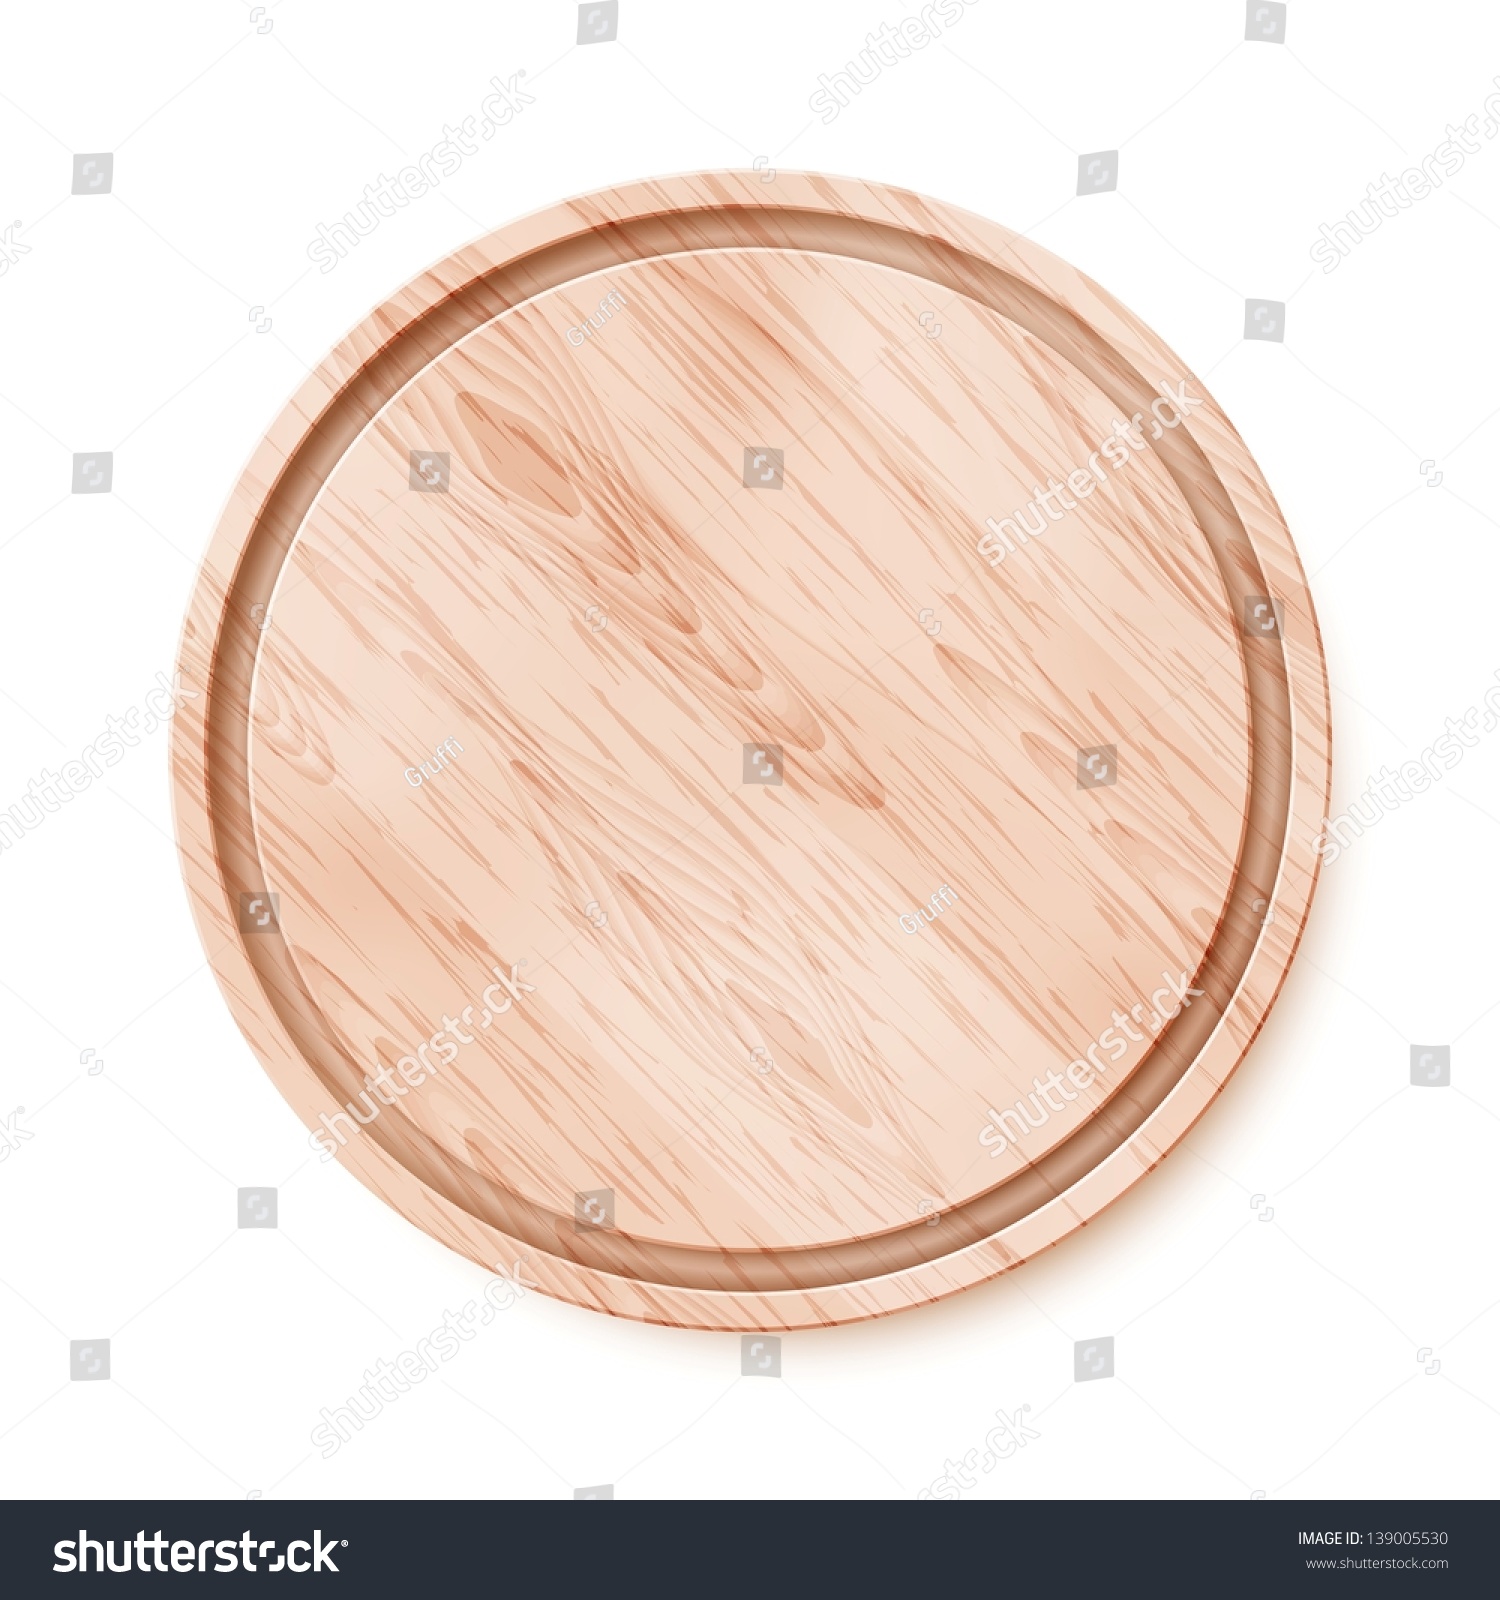 SVG of Wooden chopping board. Vector illustration svg